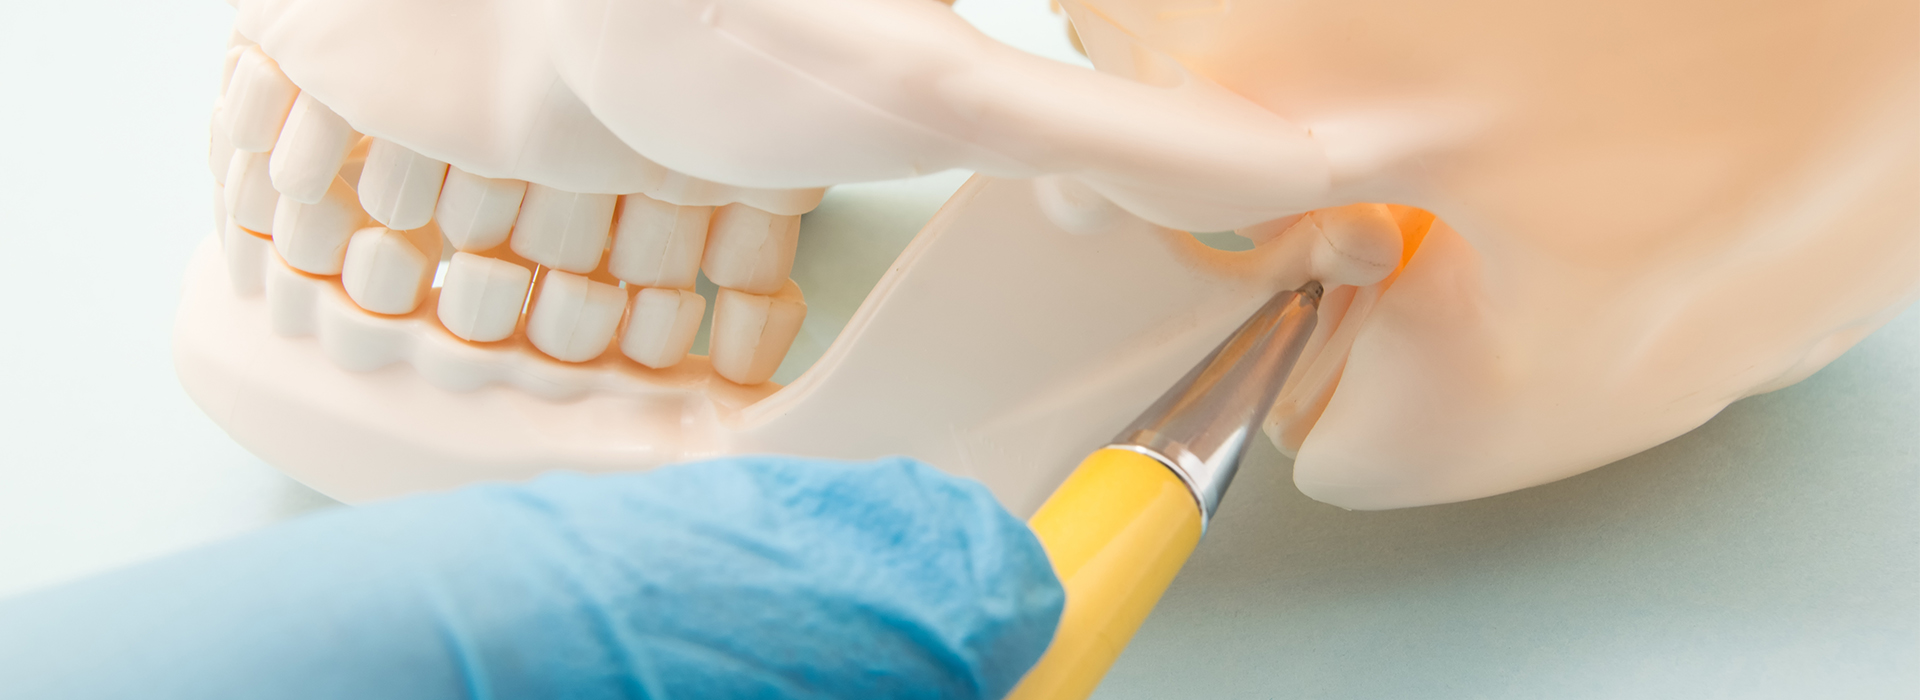 Bright Smile Dental Care, LTD | Dental Cleanings, Veneers and All-on-4 reg 